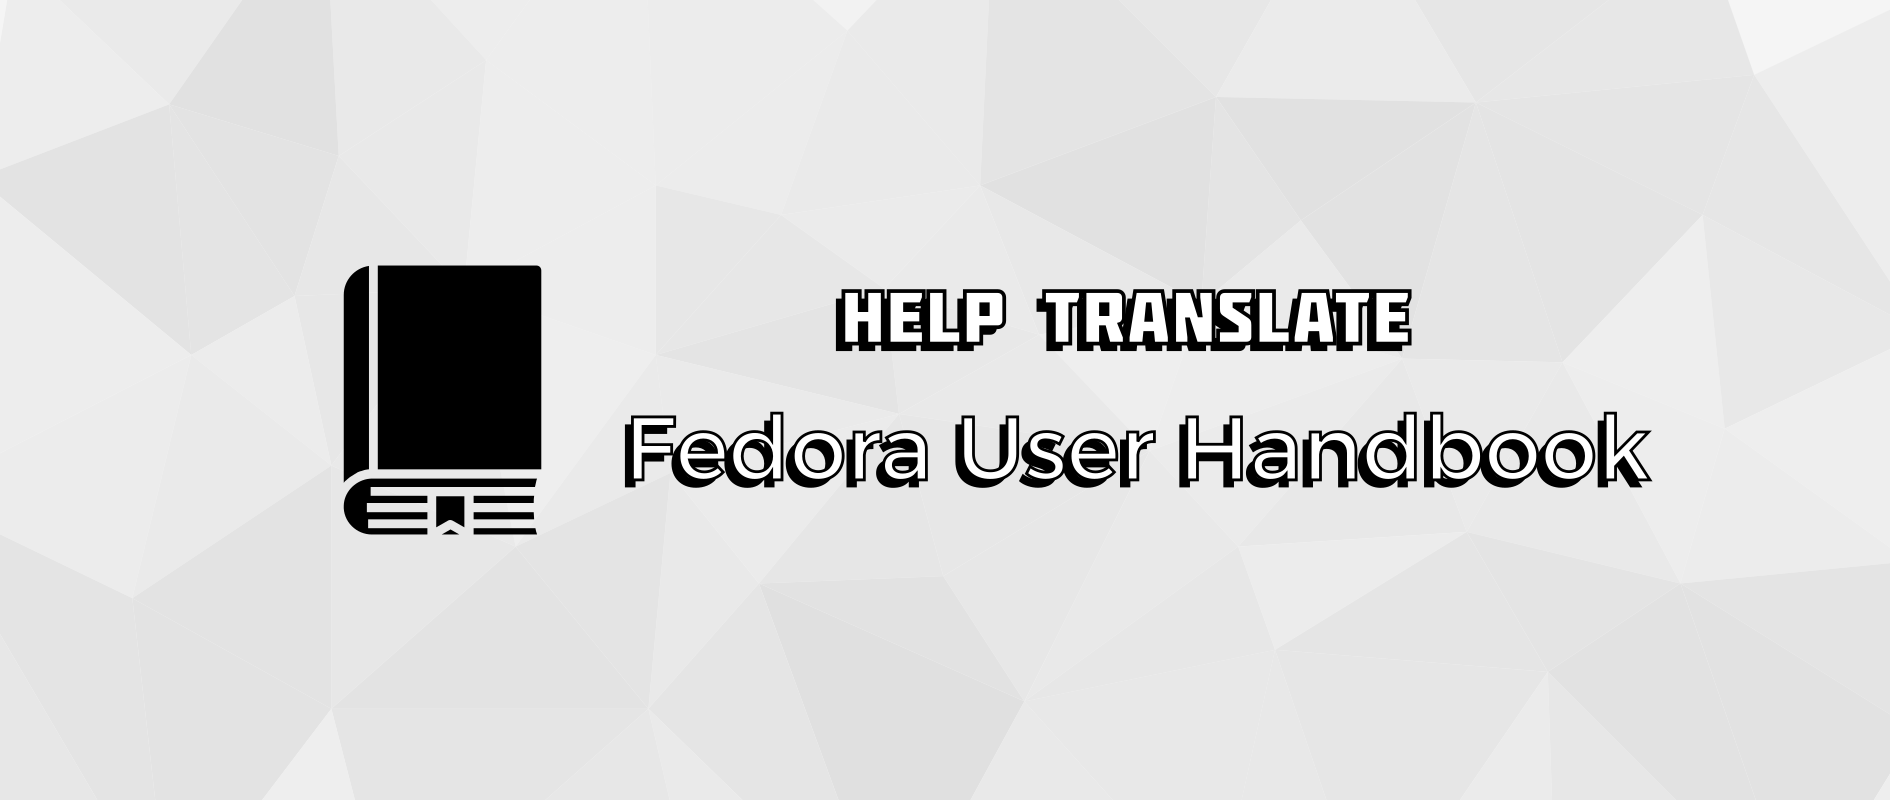 Help translate the Fedora User Handbook